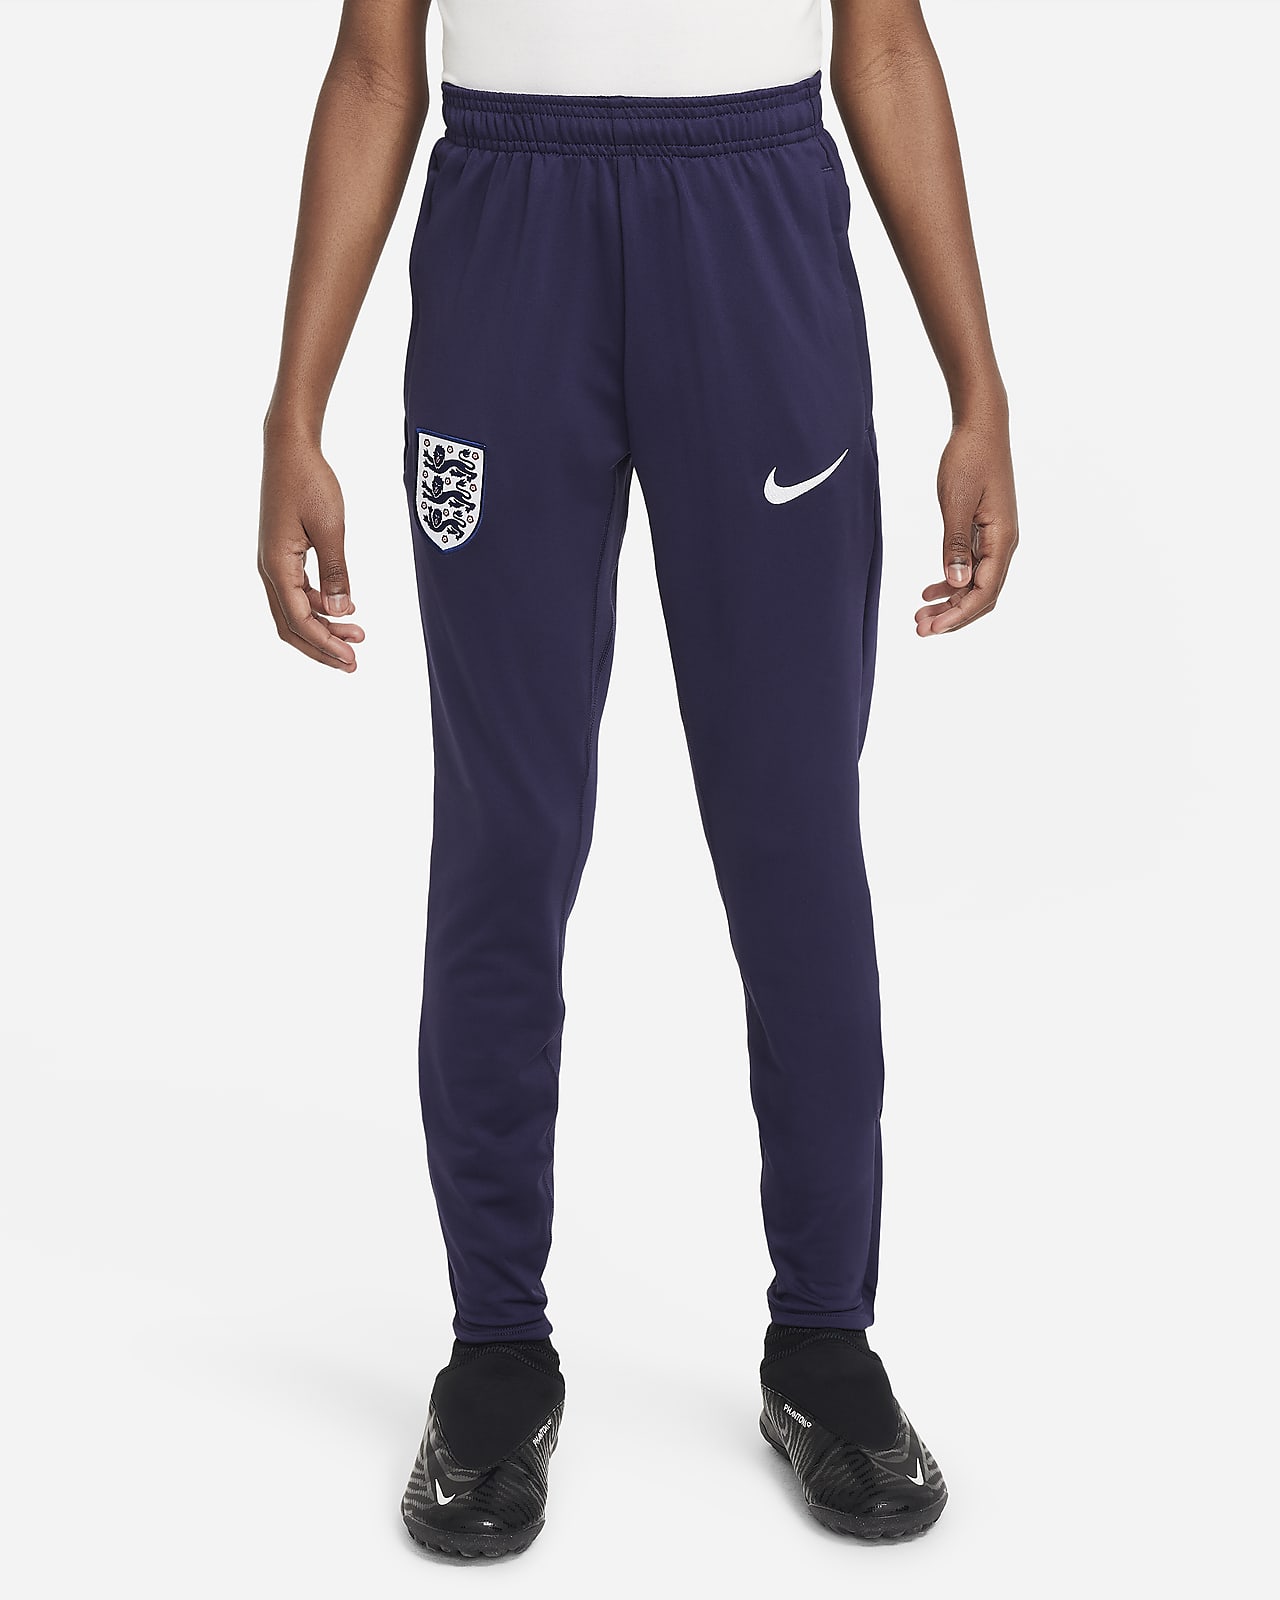 Anglaterra Strike Pantalons de futbol de teixit Knit Nike Dri-FIT - Nen/a